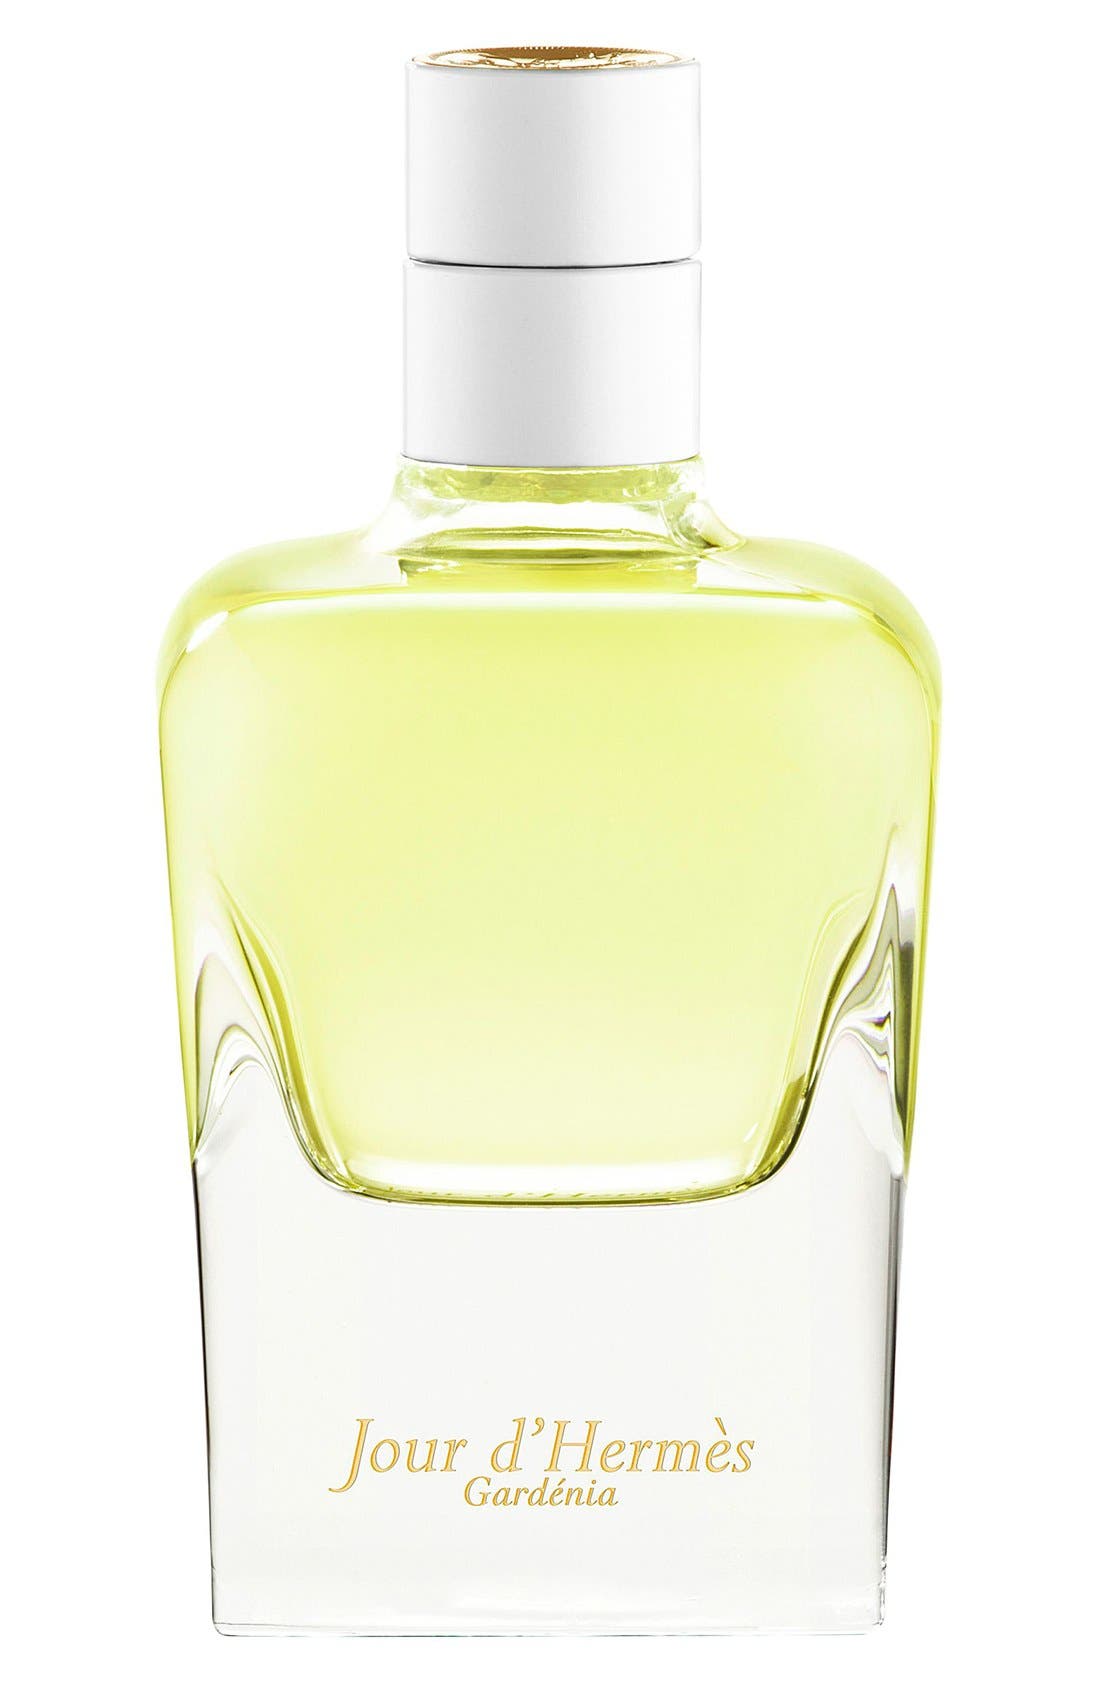 EAN 3346132304362 product image for Hermes Jour D'Hermes Gardenia - Eau De Parfum Natural Spray (Limited Edition) | upcitemdb.com